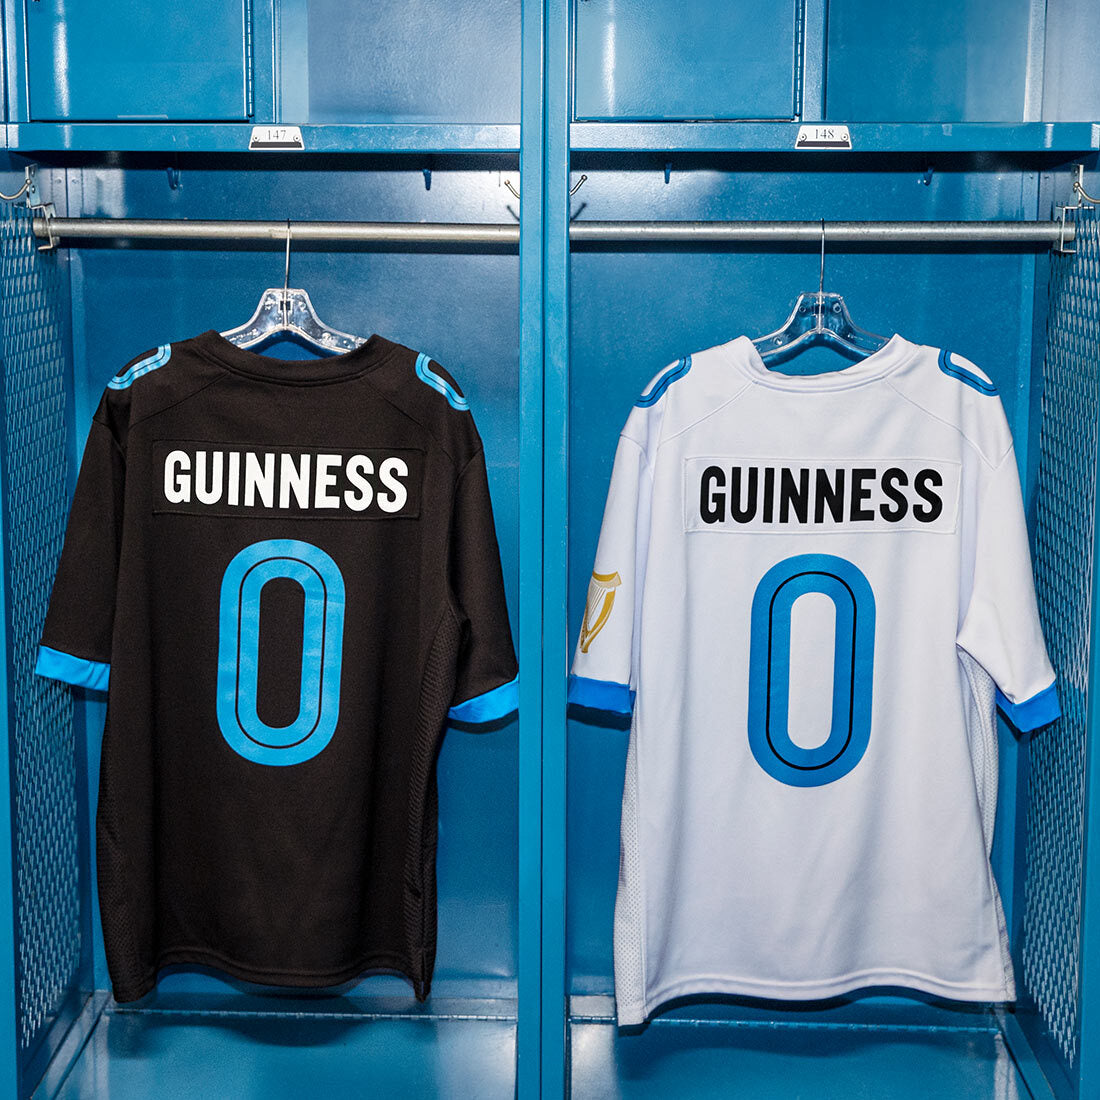 Two Guinness 0 Football Jerseys hanging in a locker.